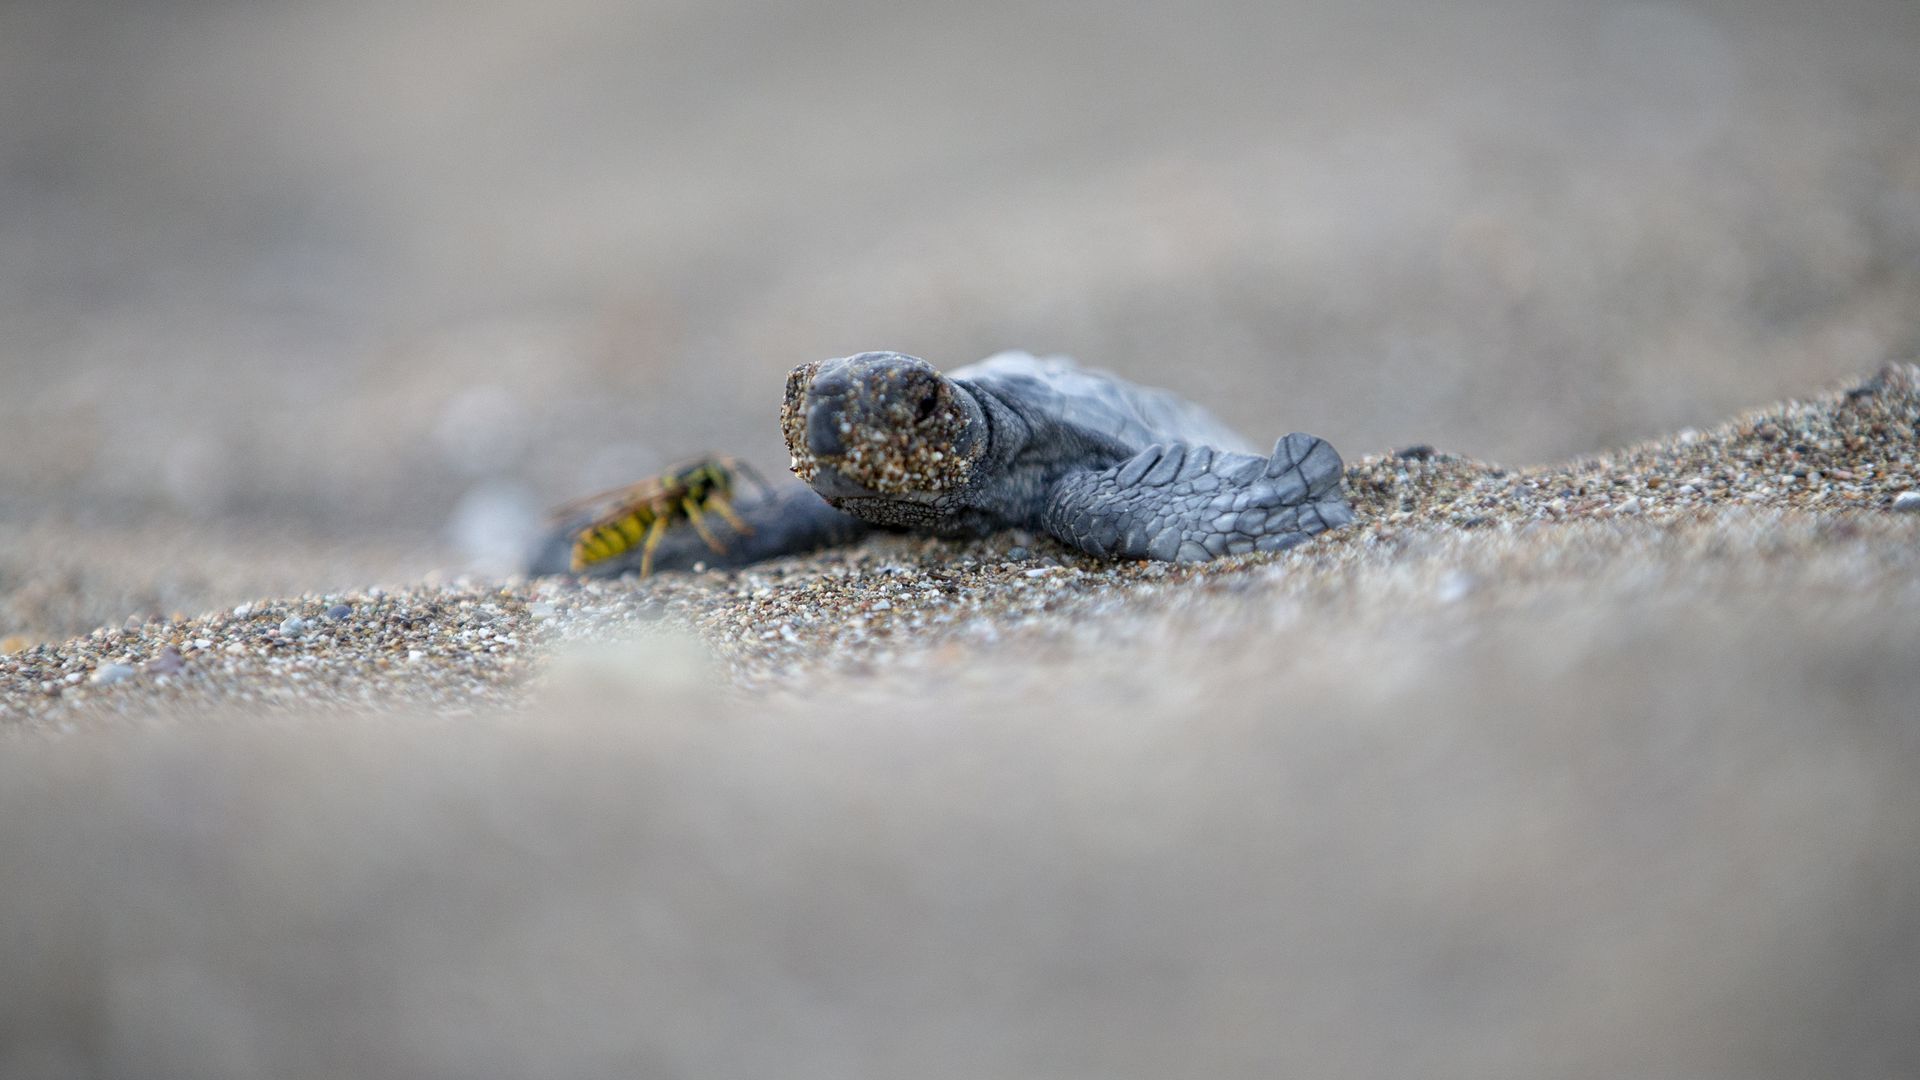 A newly hatched loggerhead turtle crawls on the beach in Turkey.